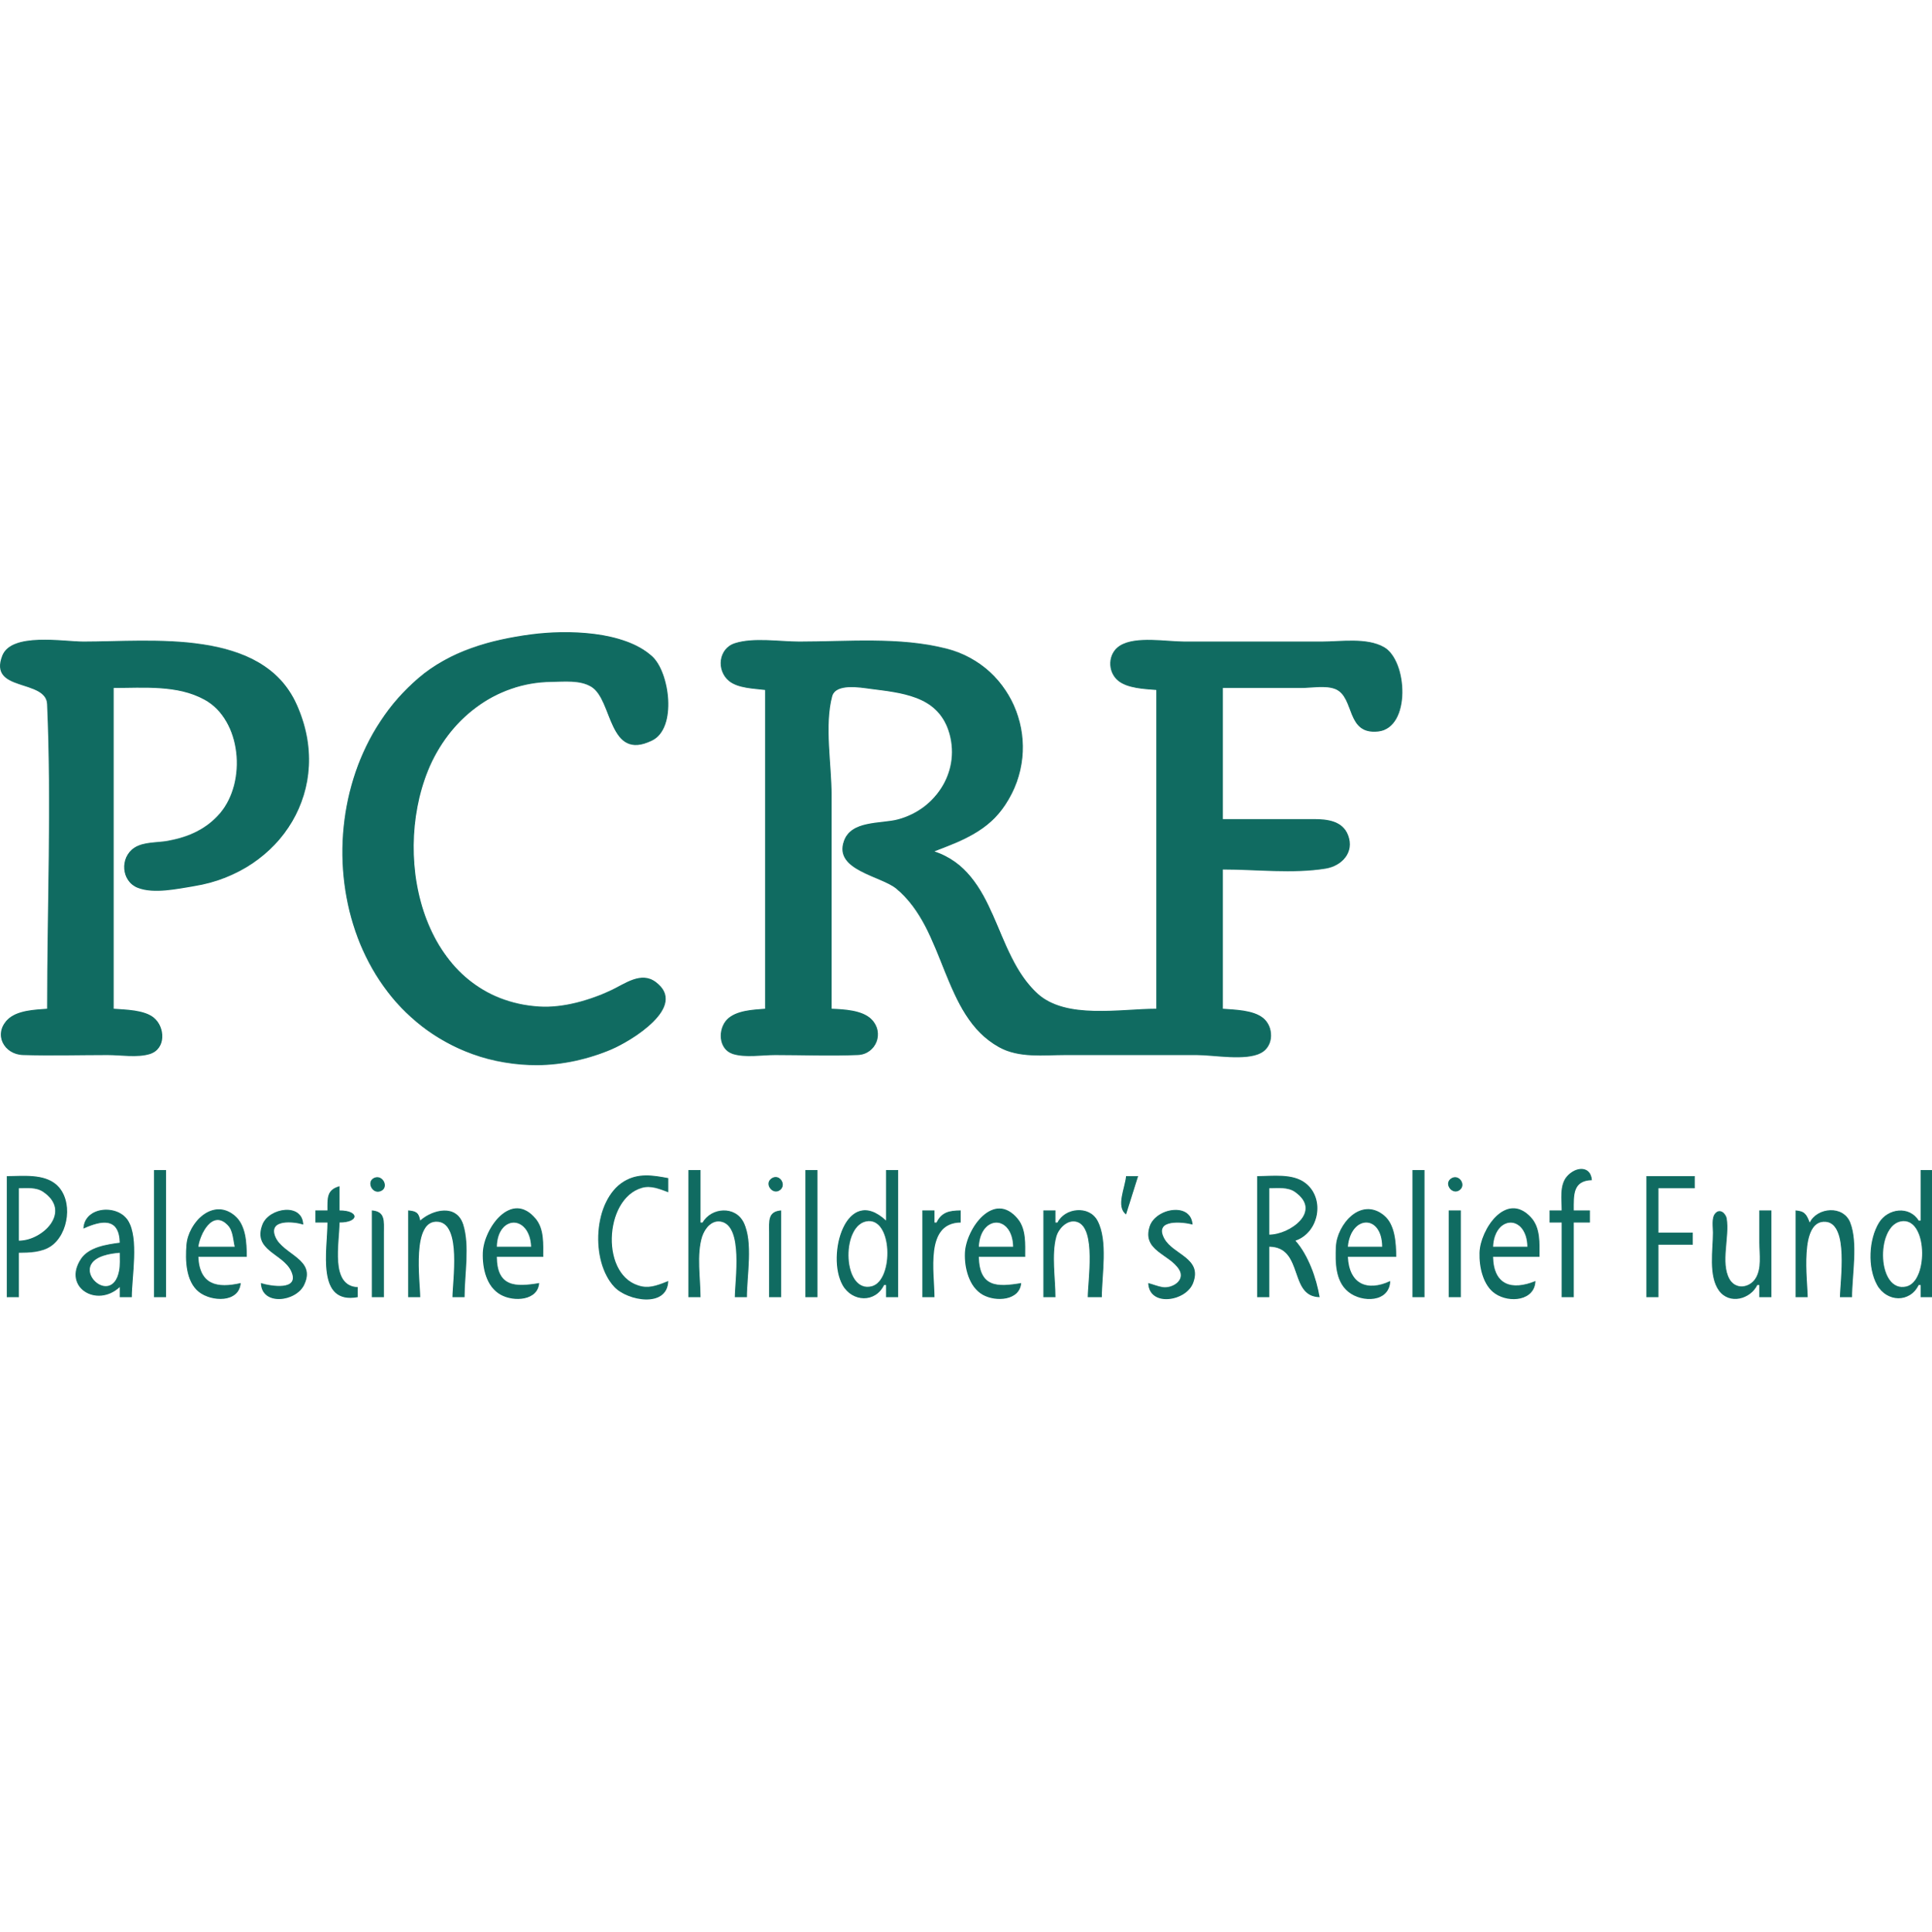 PCRF Text Logo Transparent Picture